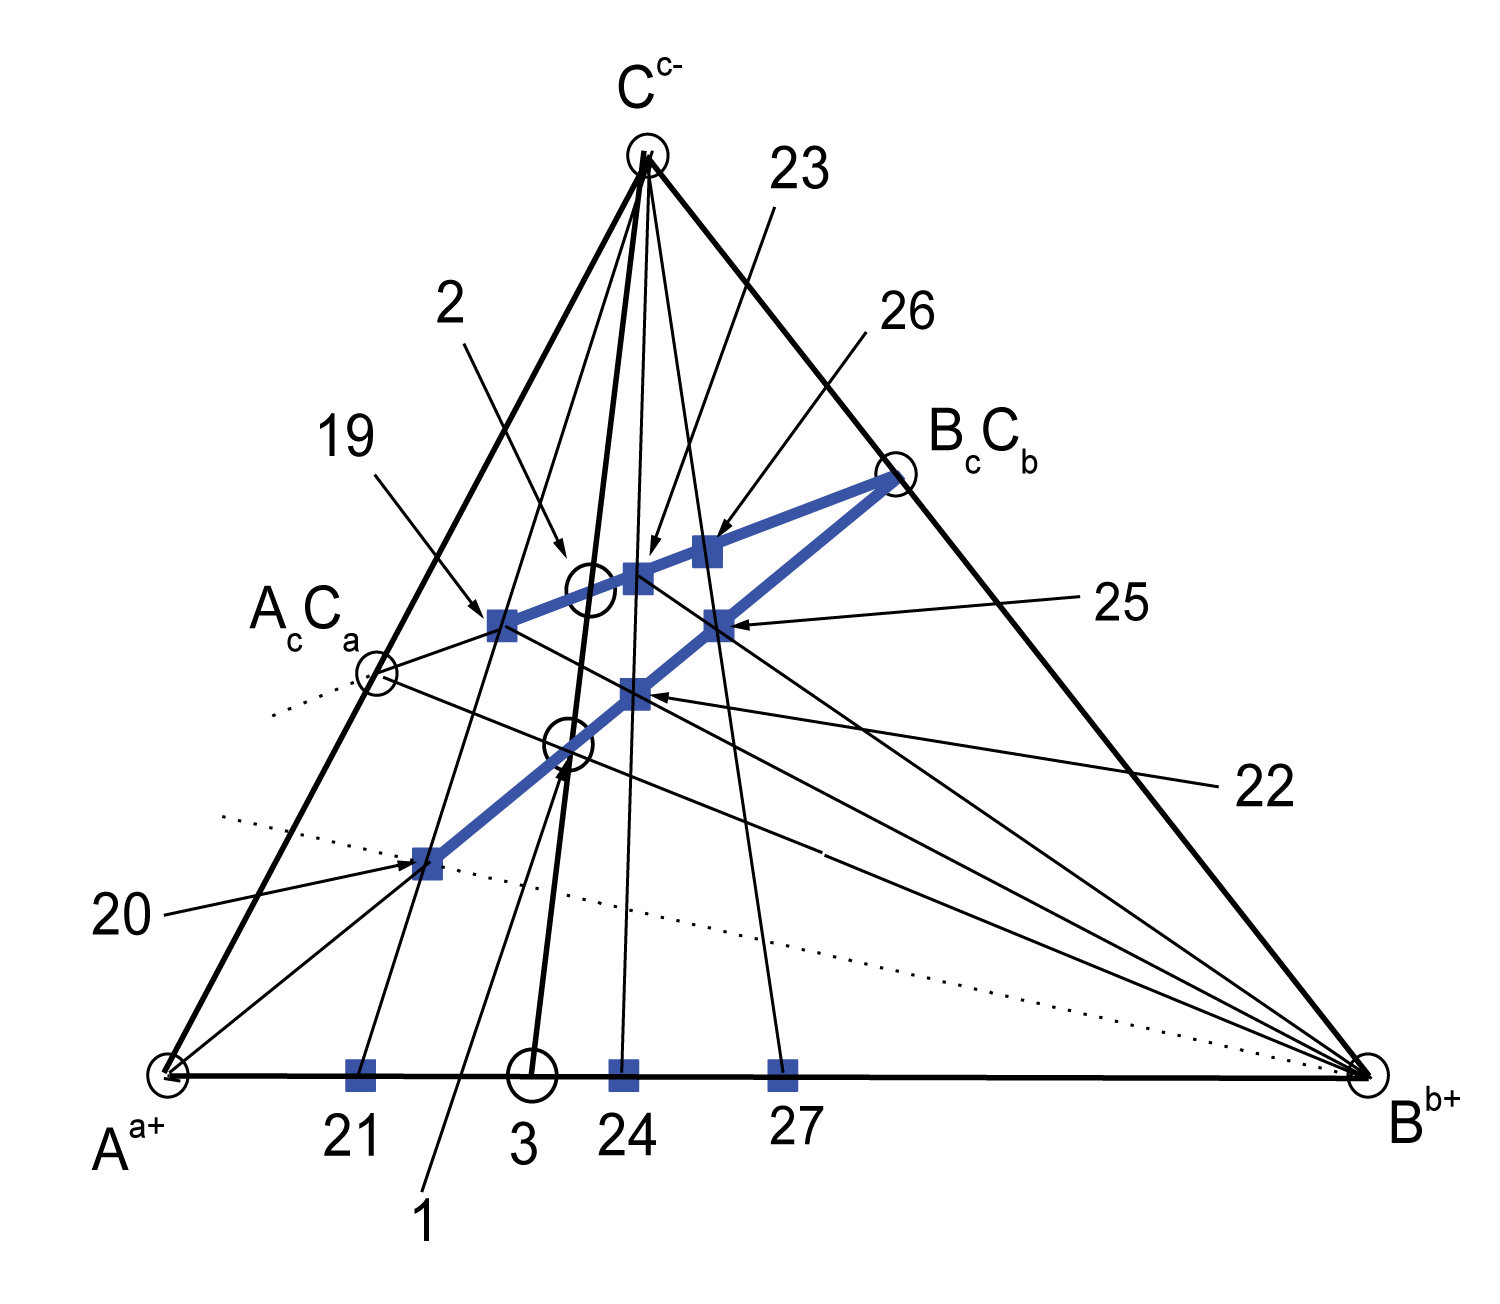 System (Aa+ – Bb+ – Cc–): m-group HS (BcCb direction). (p. 19 = TCCn(bas) = 1 = AtbcBracC(t + r)ab), (p. 20 = TChCln(bas) = 1 = [AtbcBracCrab]tabc+), (p. 21 = TwChCln(bas) = 1 = [AtbcBrac](t + r)abc+), (p. 22 = TChCln = 2 = [AtbcB(t + r)acC(t + r)ab]tabc+),(p. 23 = TCCn = 2 = AtbcB(t + r)acC(2t + r)ab, (p. 24 = TwChCln = 2 = [AtbcB(t + r)ac](2t + r)abc+), (p. 25 = TChCln = 3 = [AtbcB(2t + r)acC(2t + r)ab]tabc+), (p. 26 = TCCn = 3 = AtbcB(2t + r)acC(3t + r)ab, (p. 27 = TwChCln = 3 = [AtbcB(2t + r)ac](3t + r)abc+).